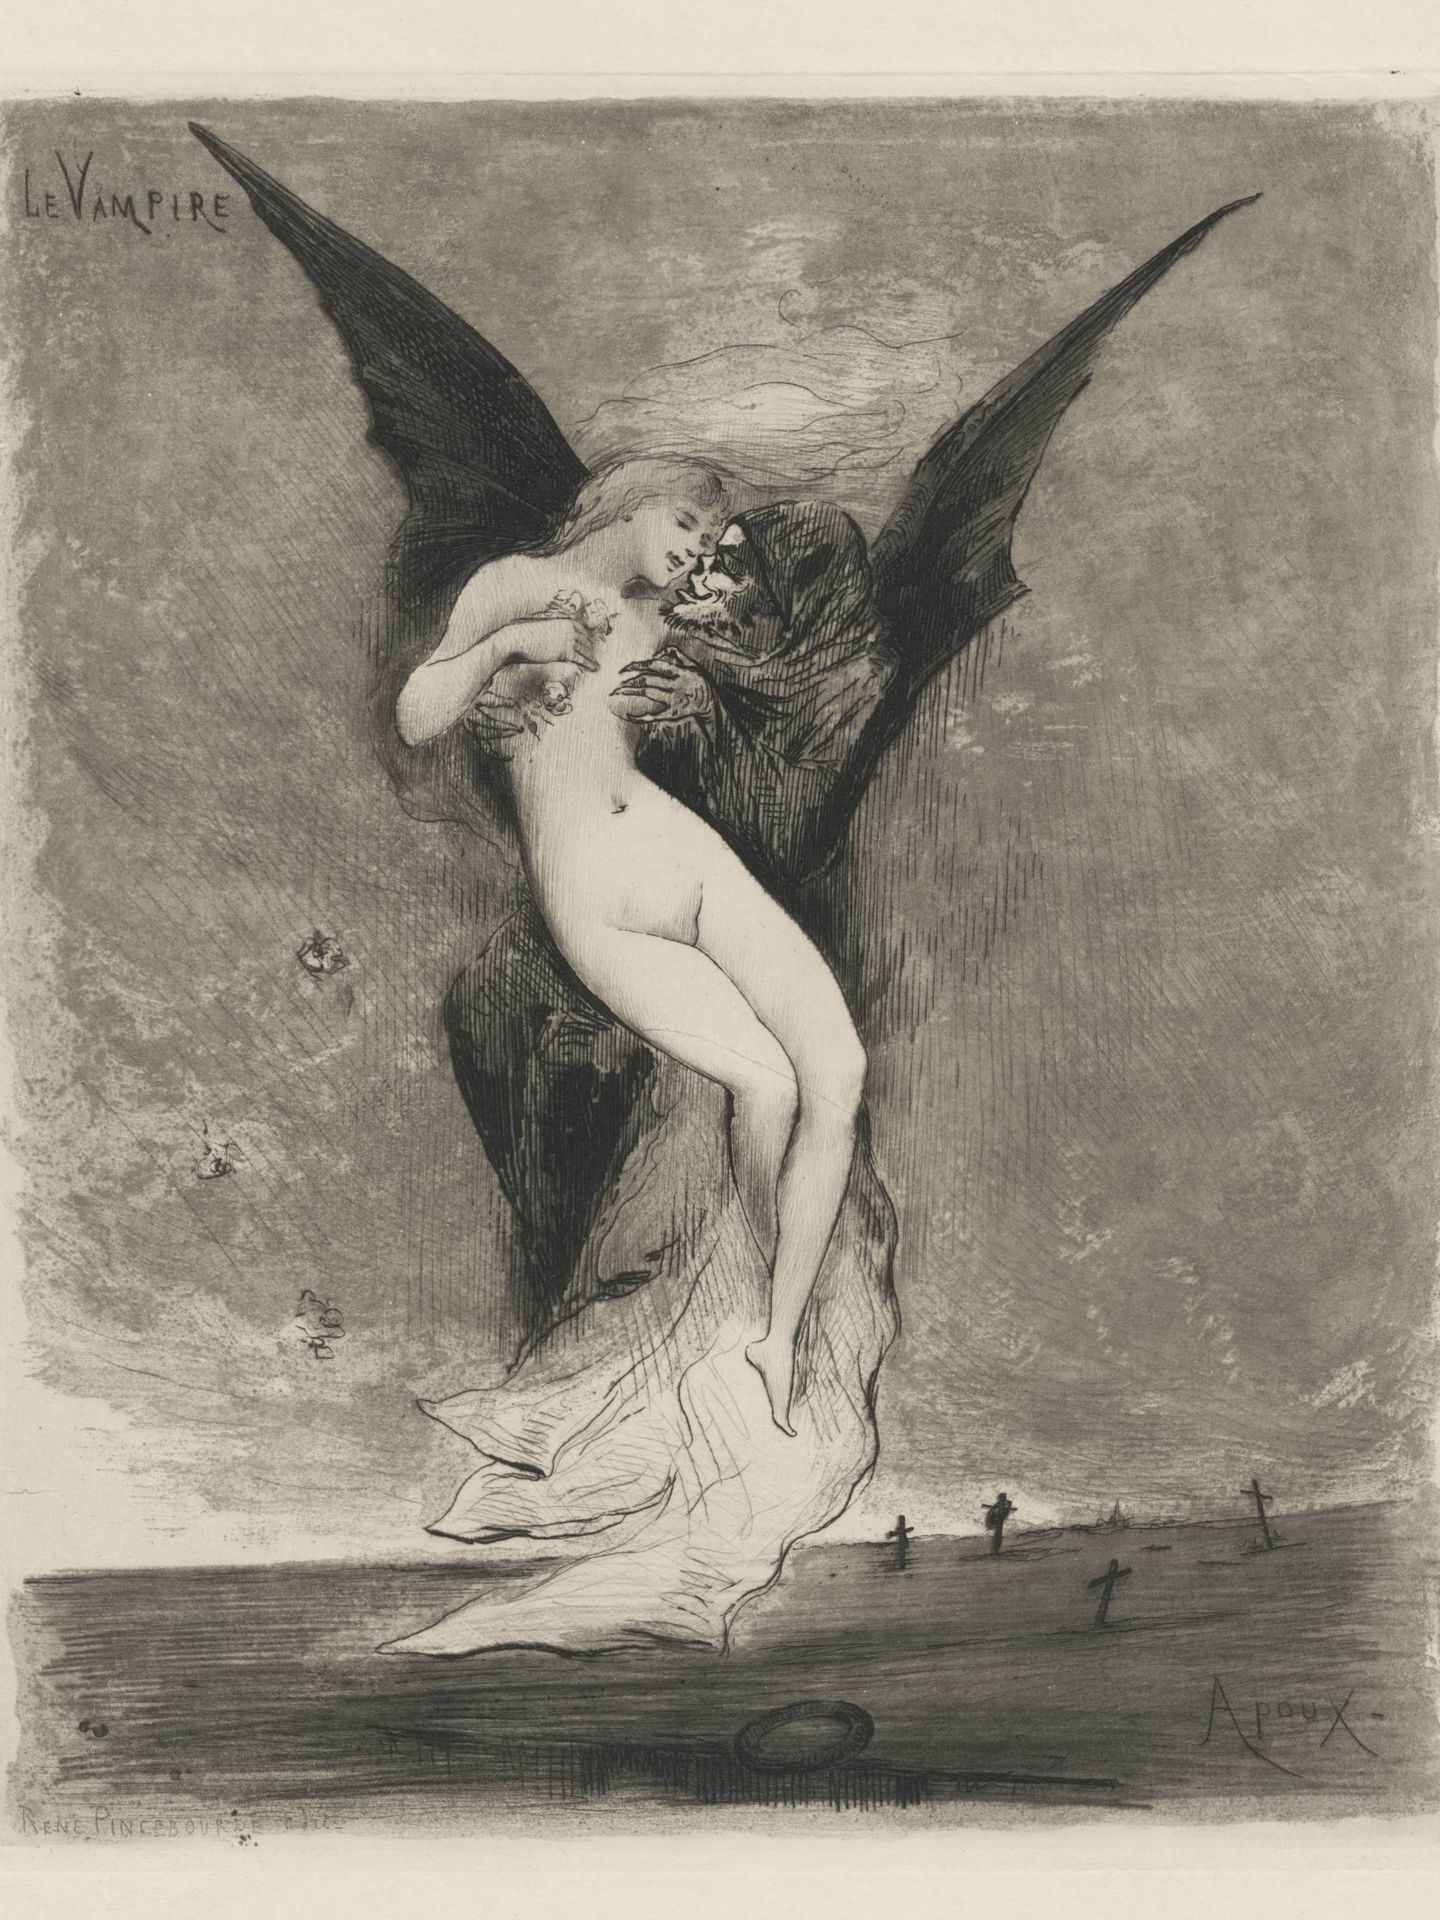 'Le Vampire' (1890), de Joseph Apoux. (CaixaForum)